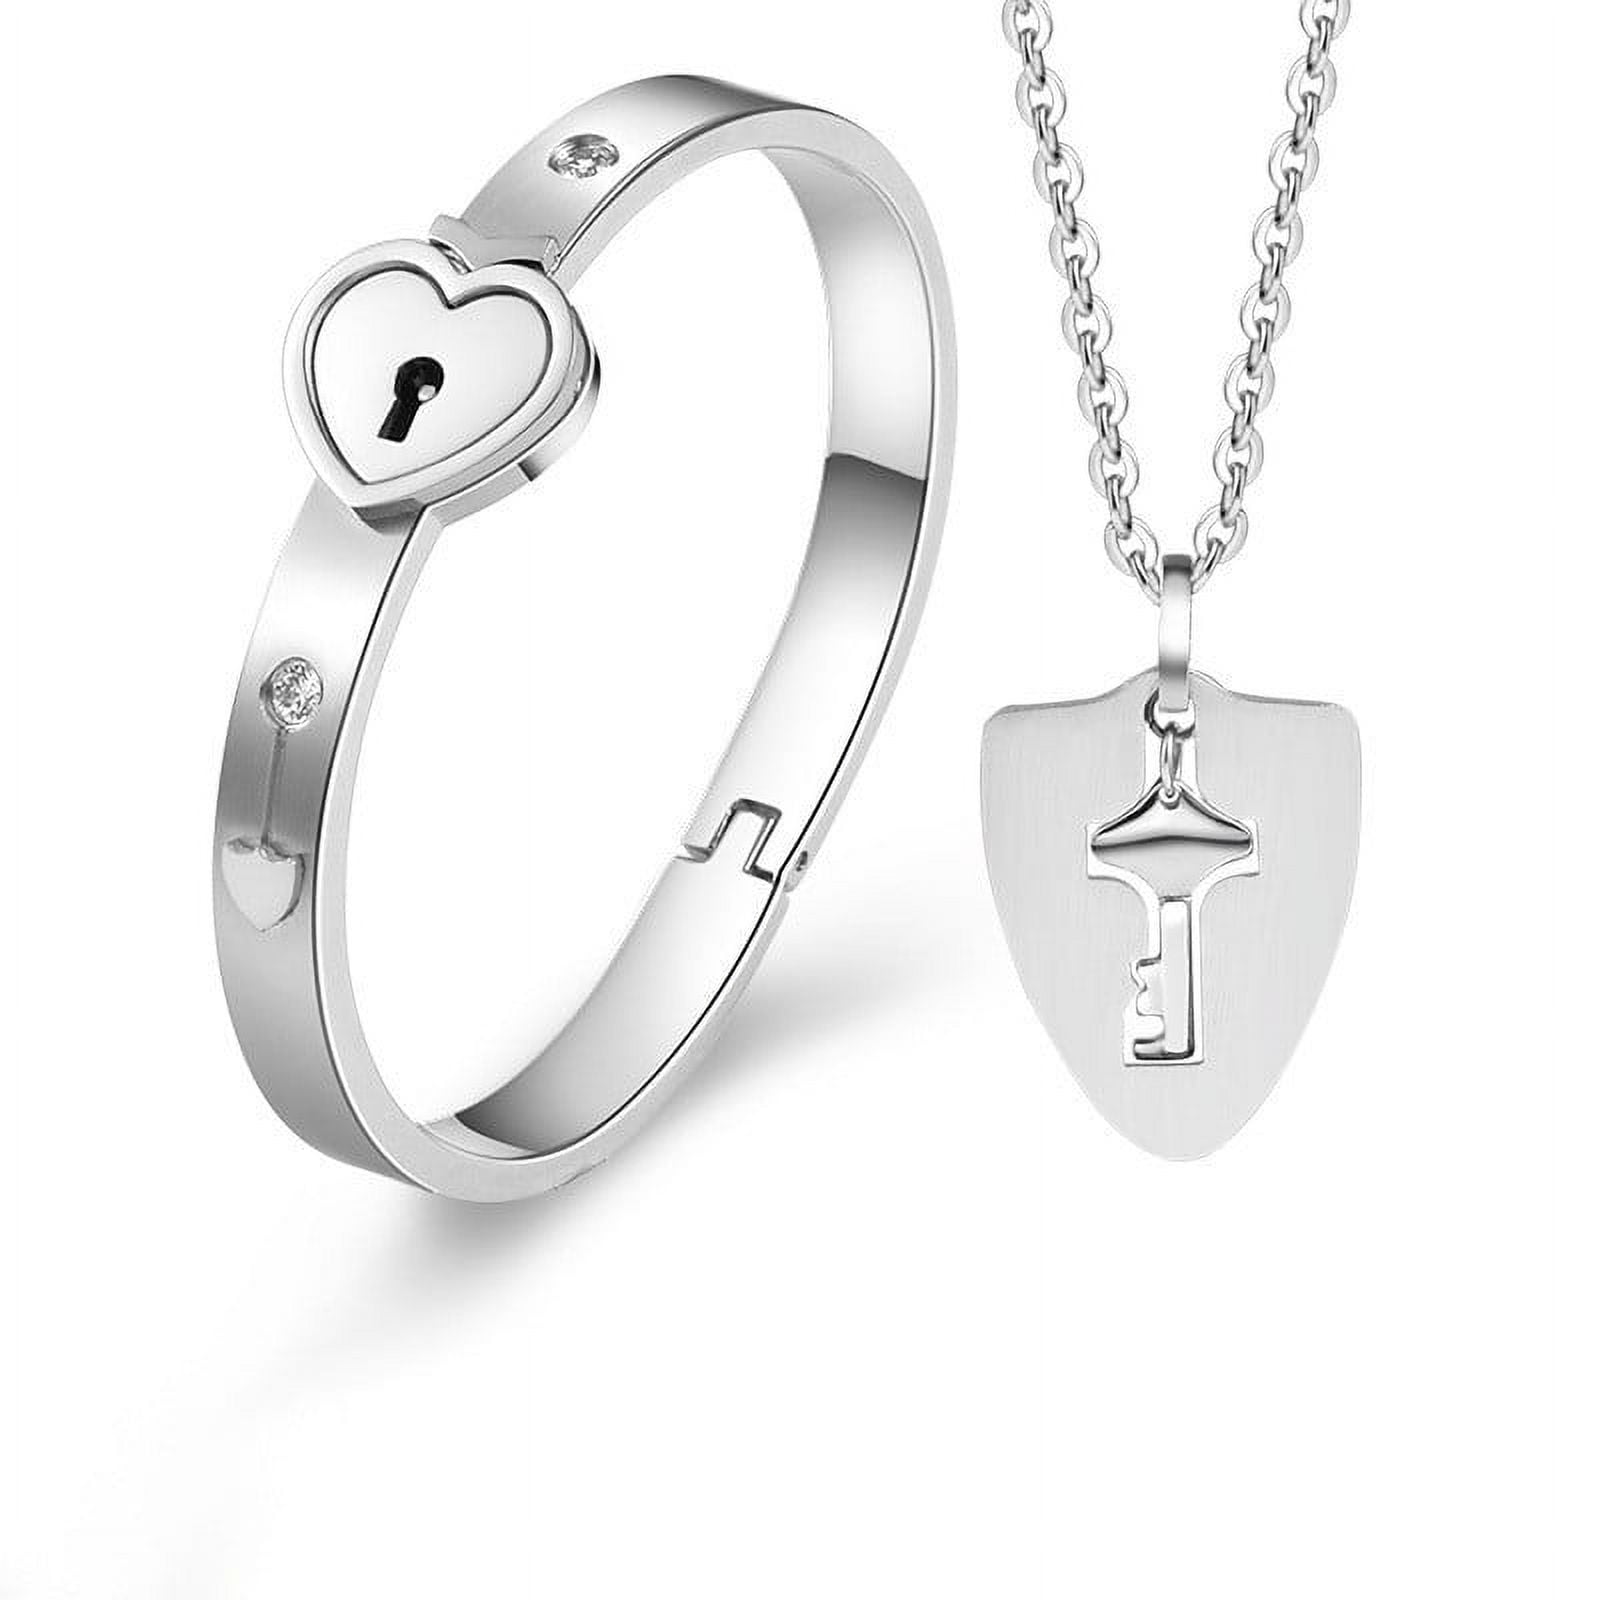 PPJew Couples Bracelets Lock key Matching Relationship Bracelet